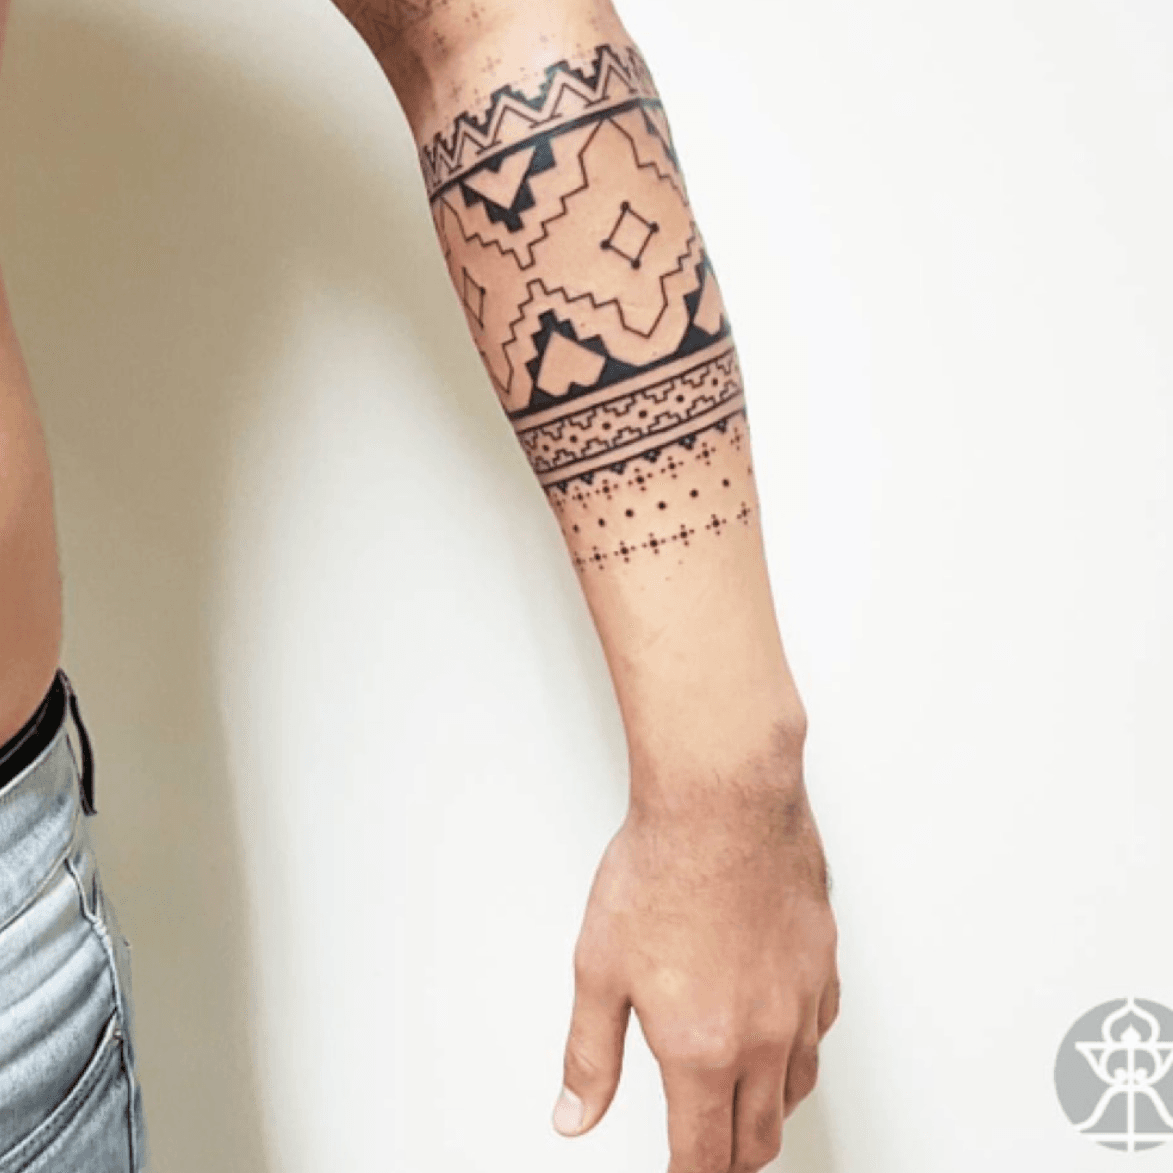 Armband Tattoos  25 Best Armband Tattoo Designs  by Trending Tattoo   Medium